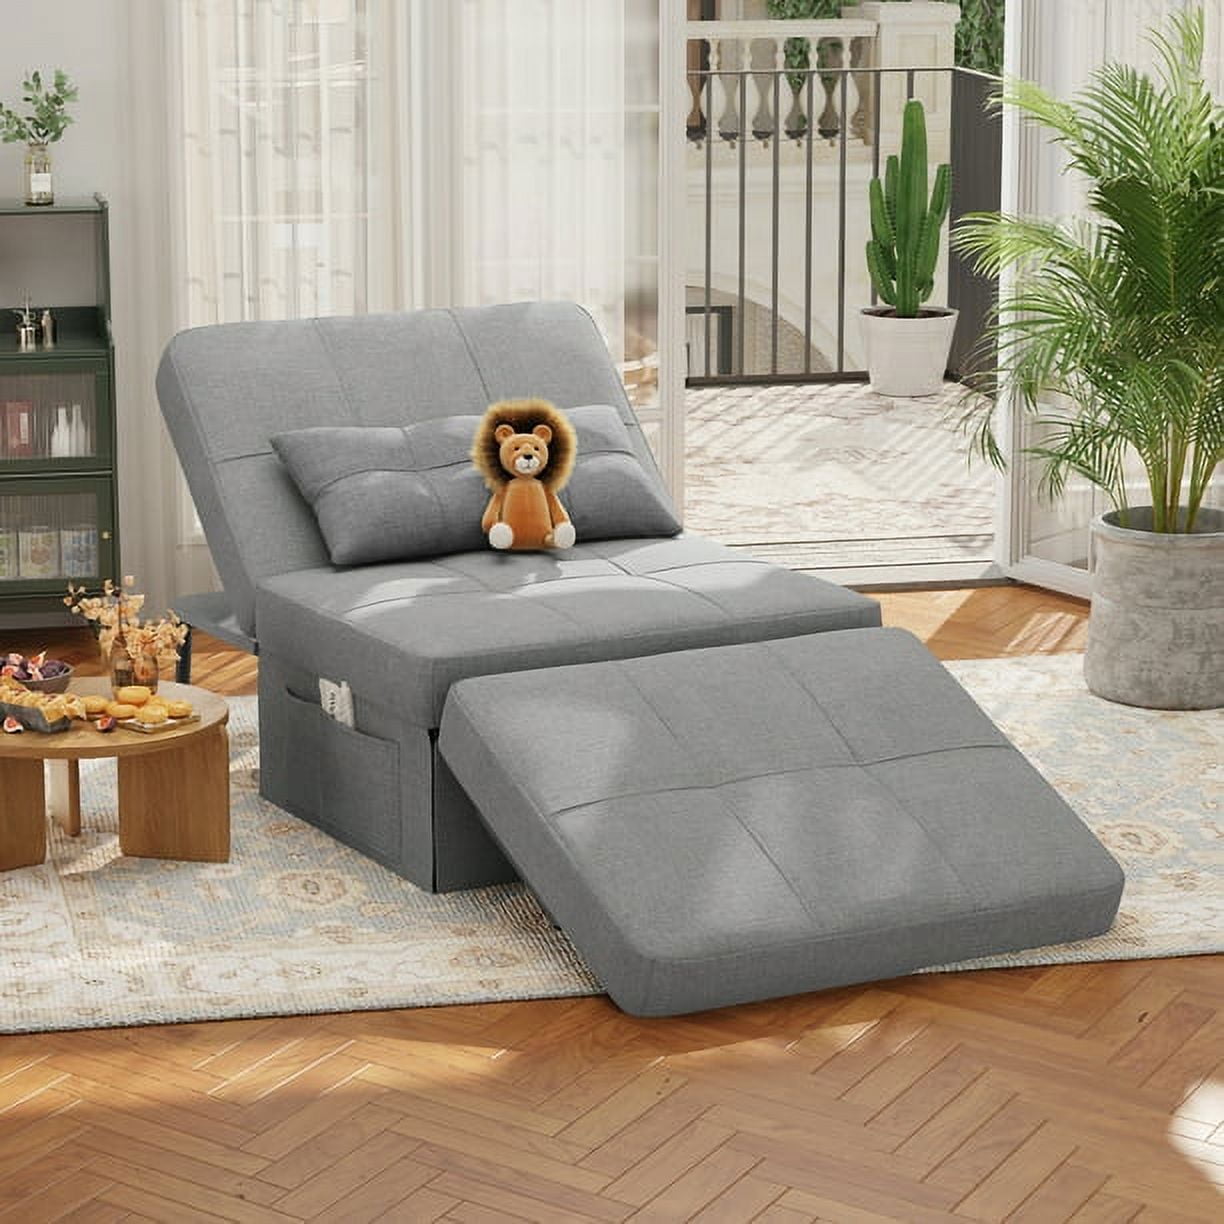 Chair Bed, Lofka Convertible Recliner Single Sofa Bed, Free Installation,  730 lbs, Light Gray